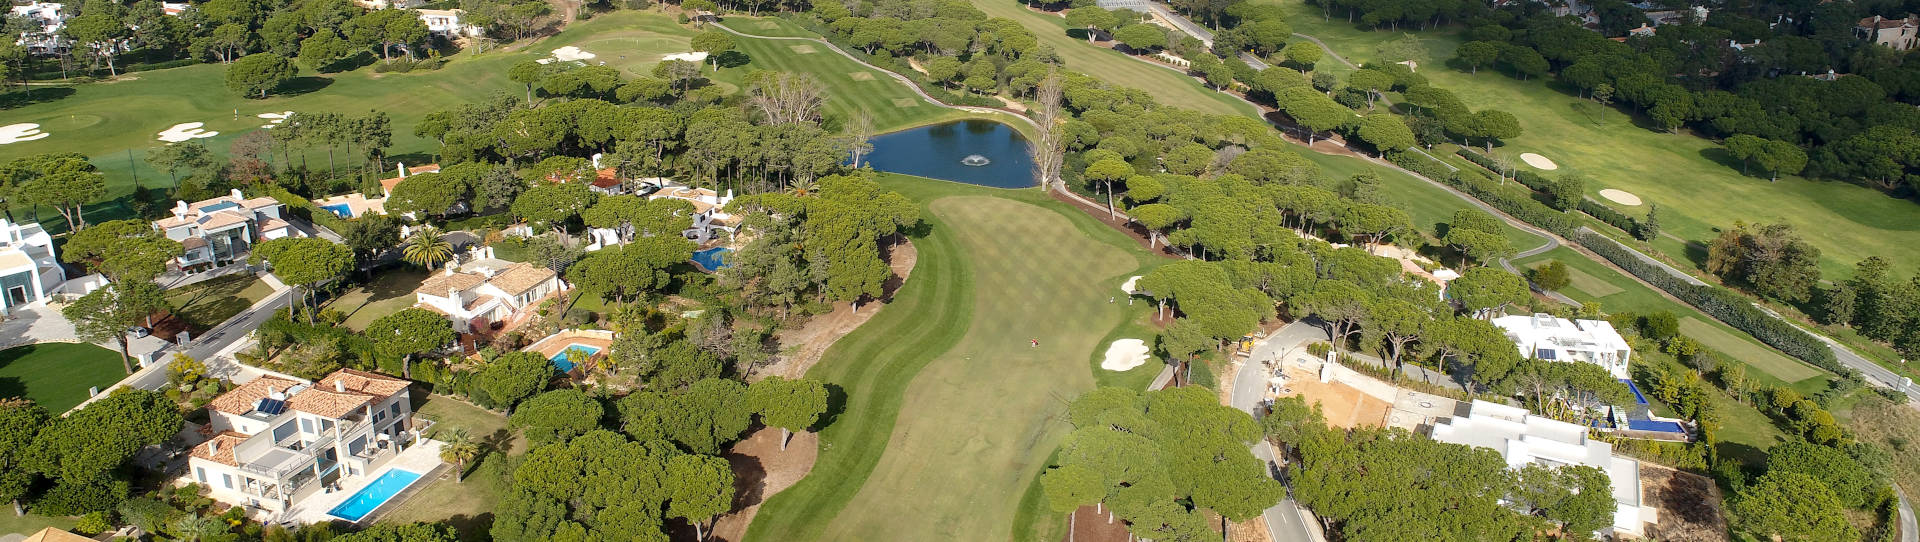 Portugal golf holidays - Quinta do Lago Golf Experience - Photo 1